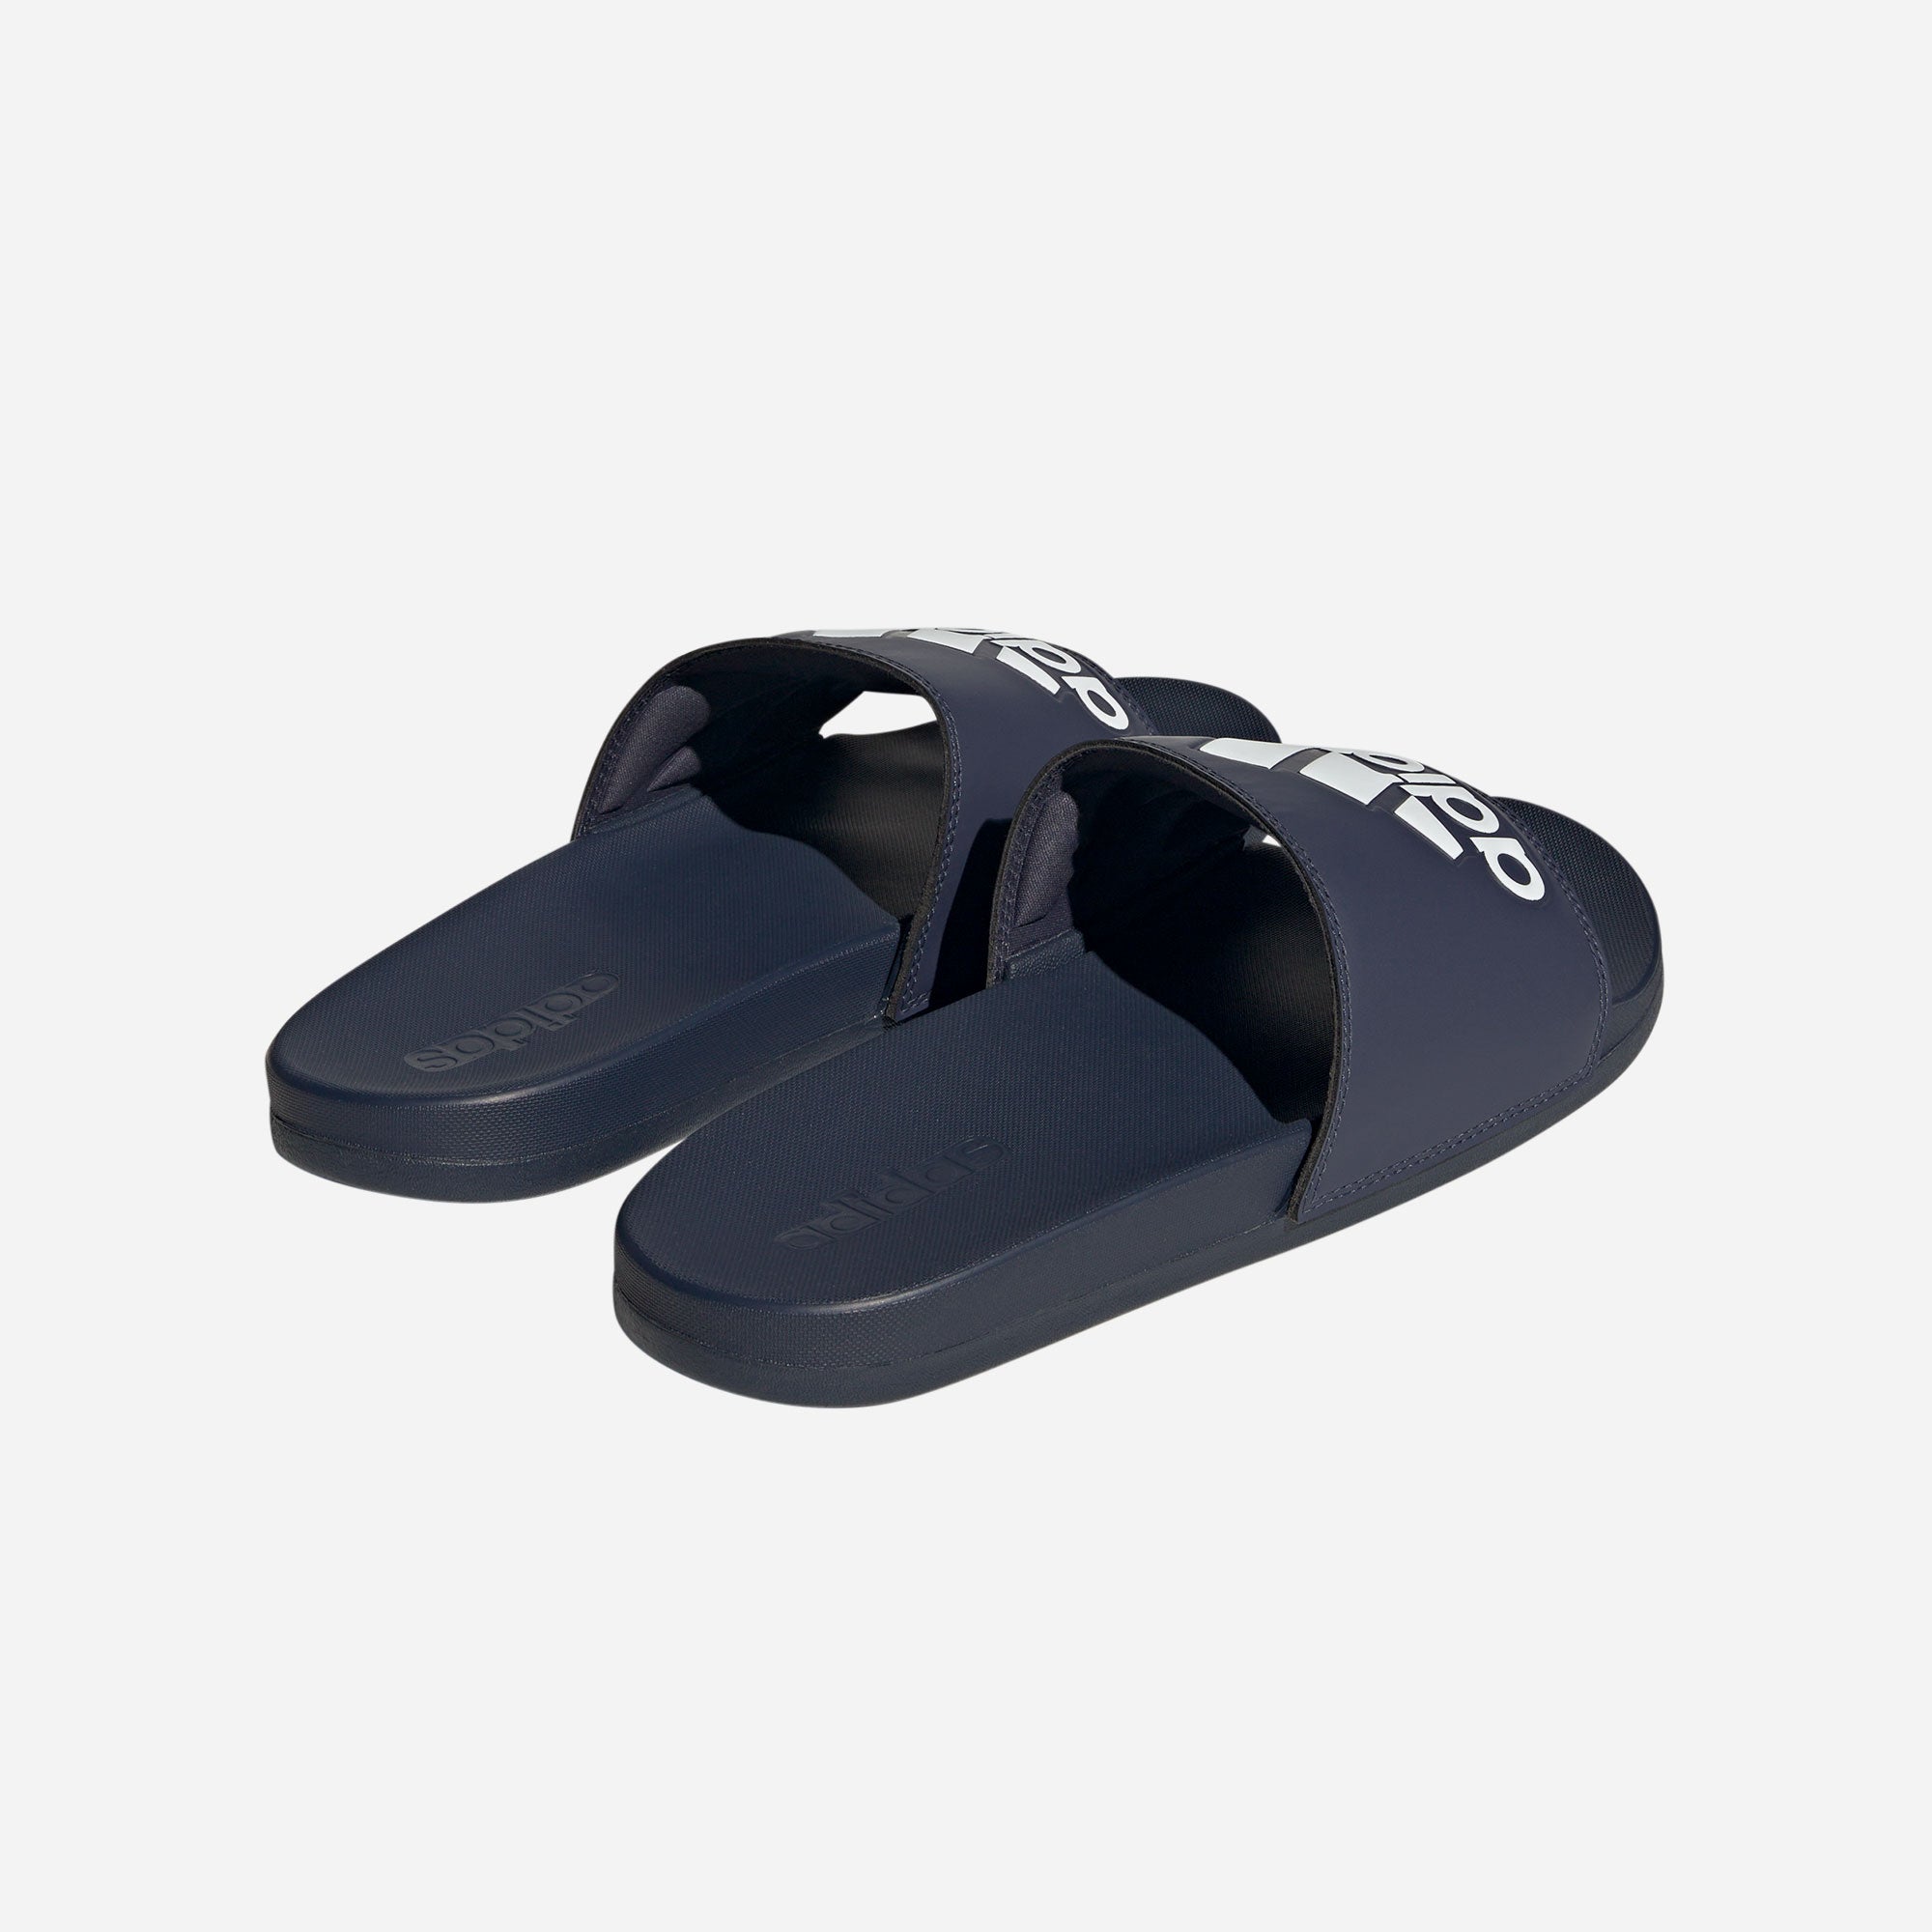 adidas | Shoes | Adidas Duramo Slide Sandals K4 Pink Size 6 | Poshmark